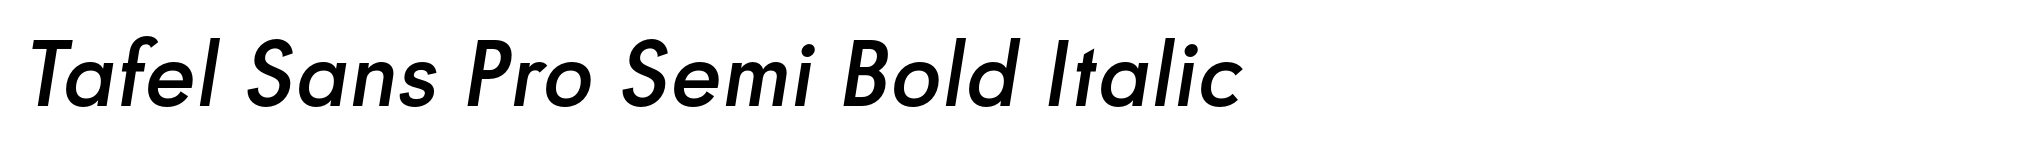 Tafel Sans Pro Semi Bold Italic image